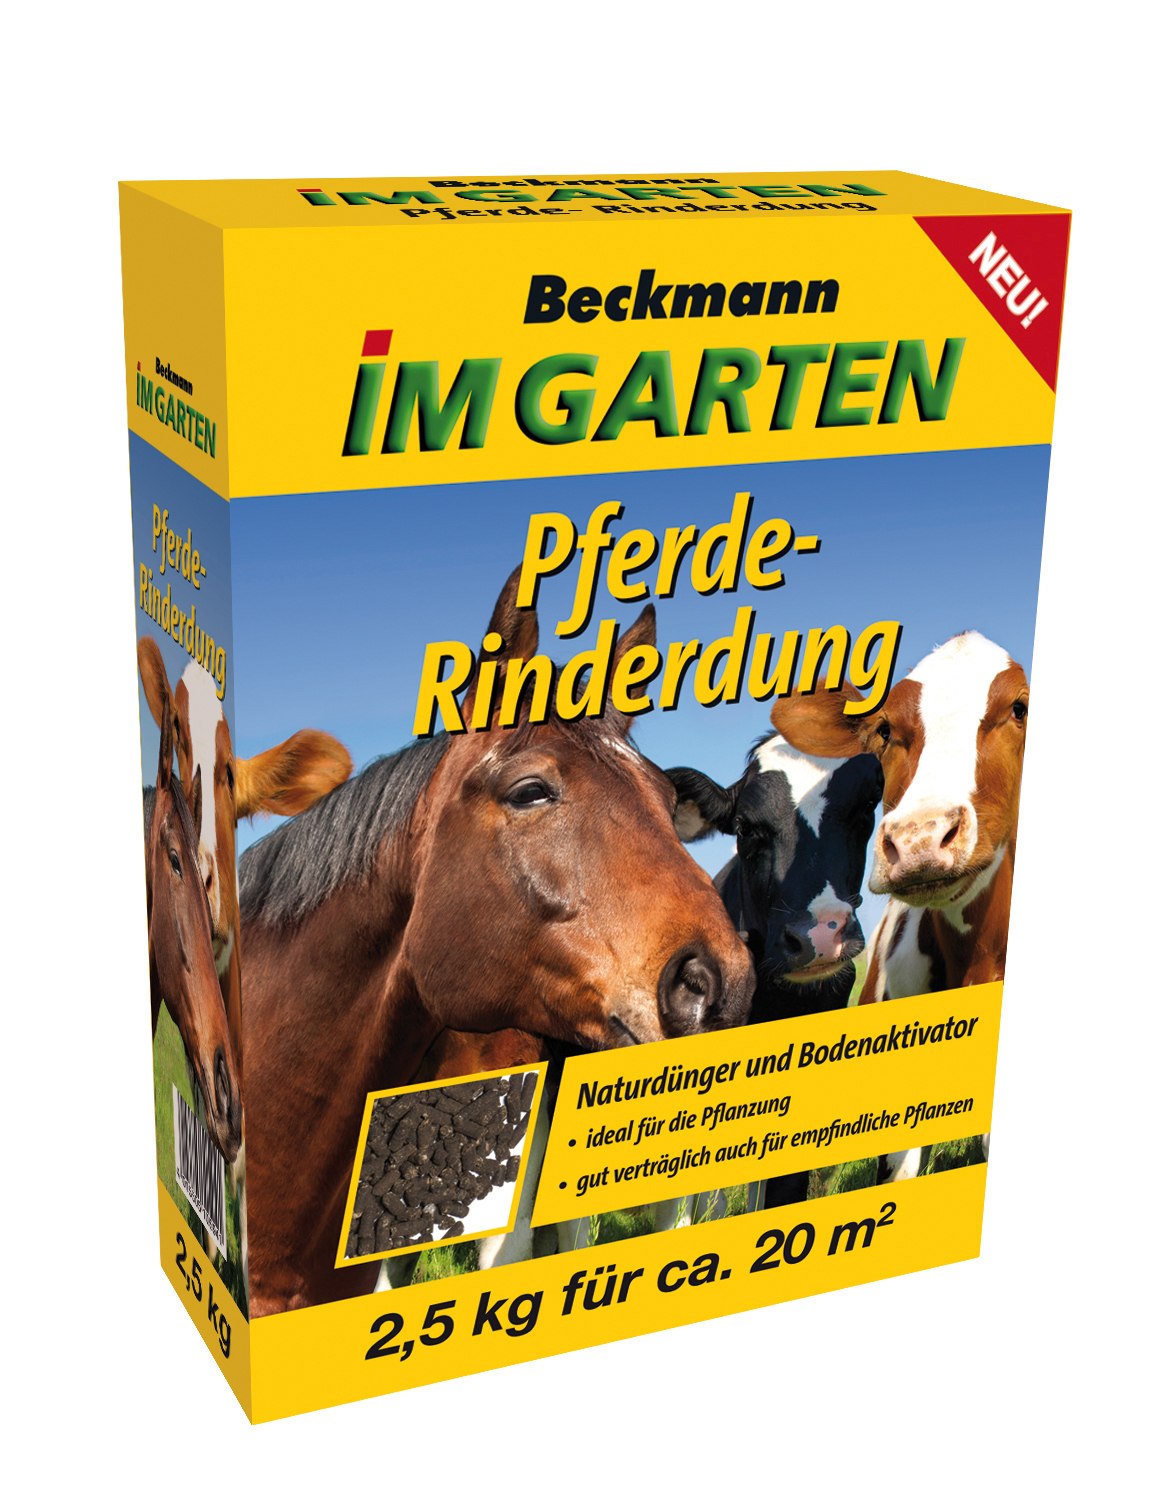 Beckmann & Brehm GmbH Pferde-Rinderdung pelletiert 2,5kg